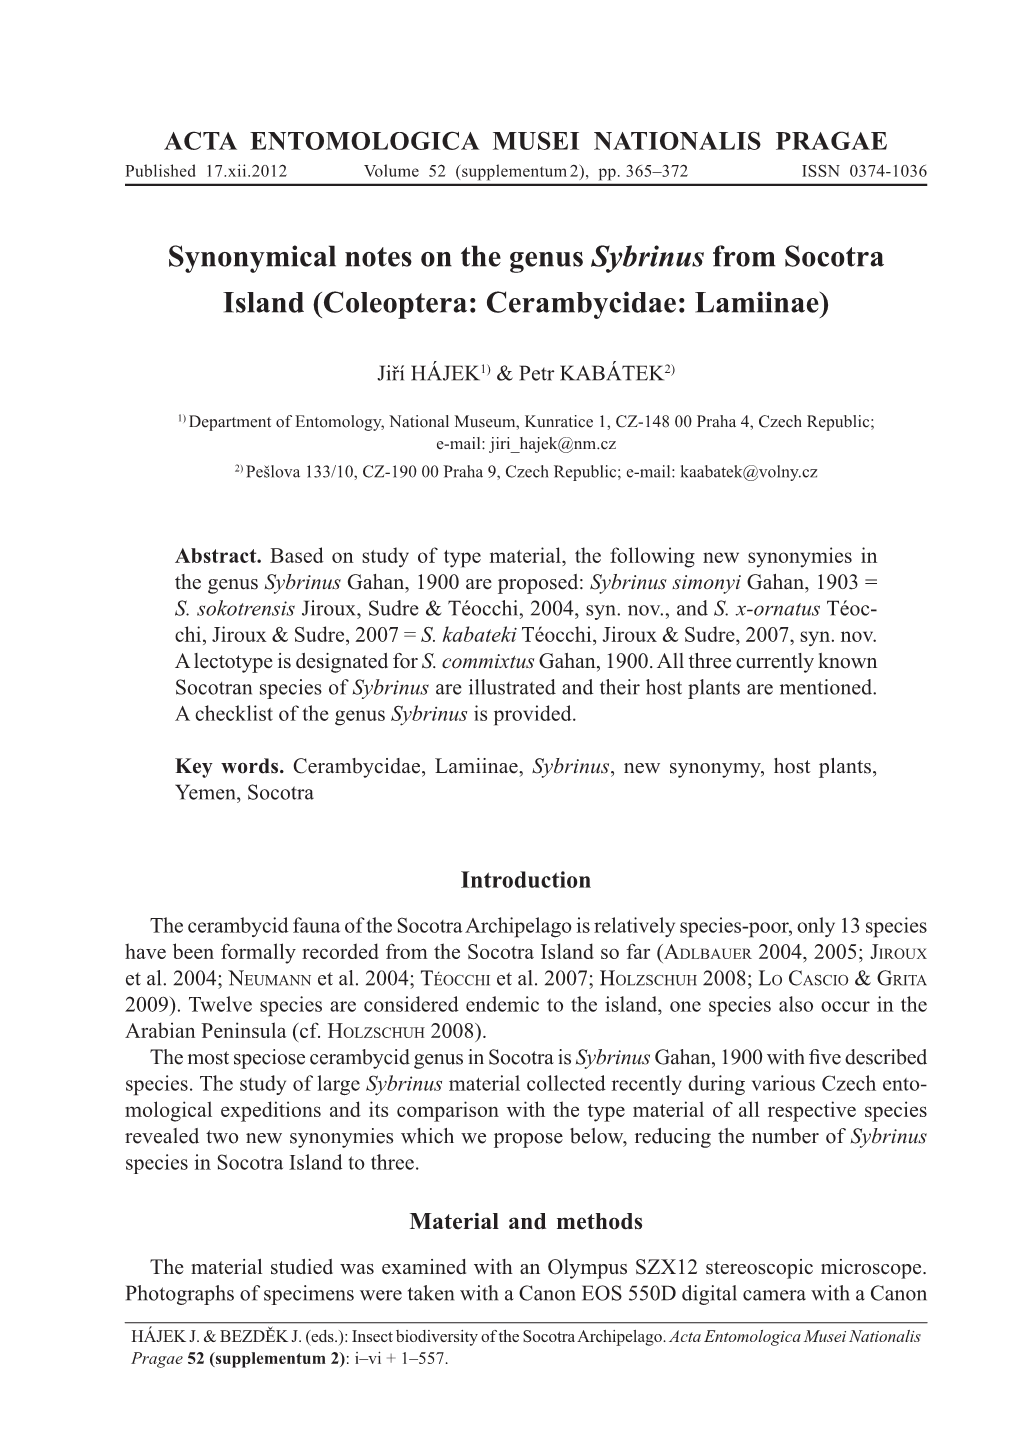 Synonymical Notes on the Genus Sybrinus from Socotra Island (Coleoptera: Cerambycidae: Lamiinae)